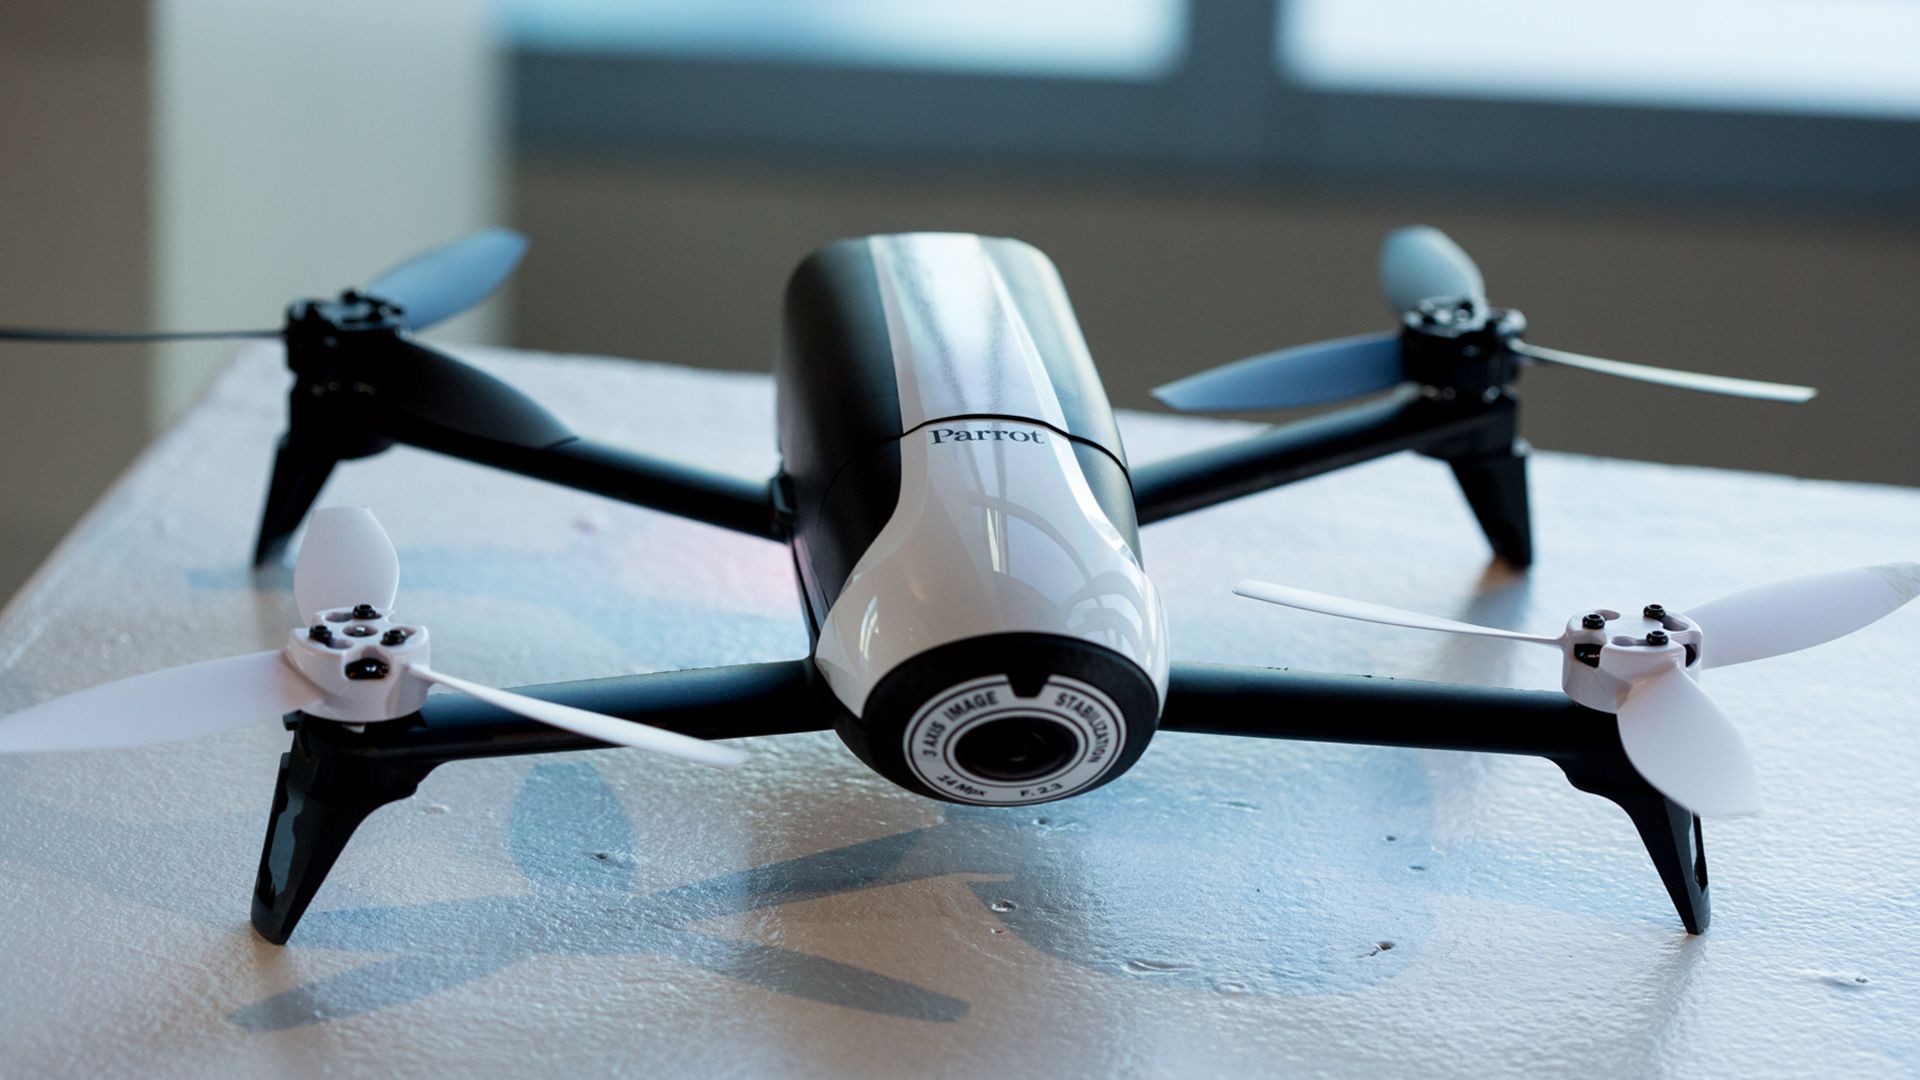 Parrot Unveils The Bebop 2, a Faster, Longer-Lasting Drone